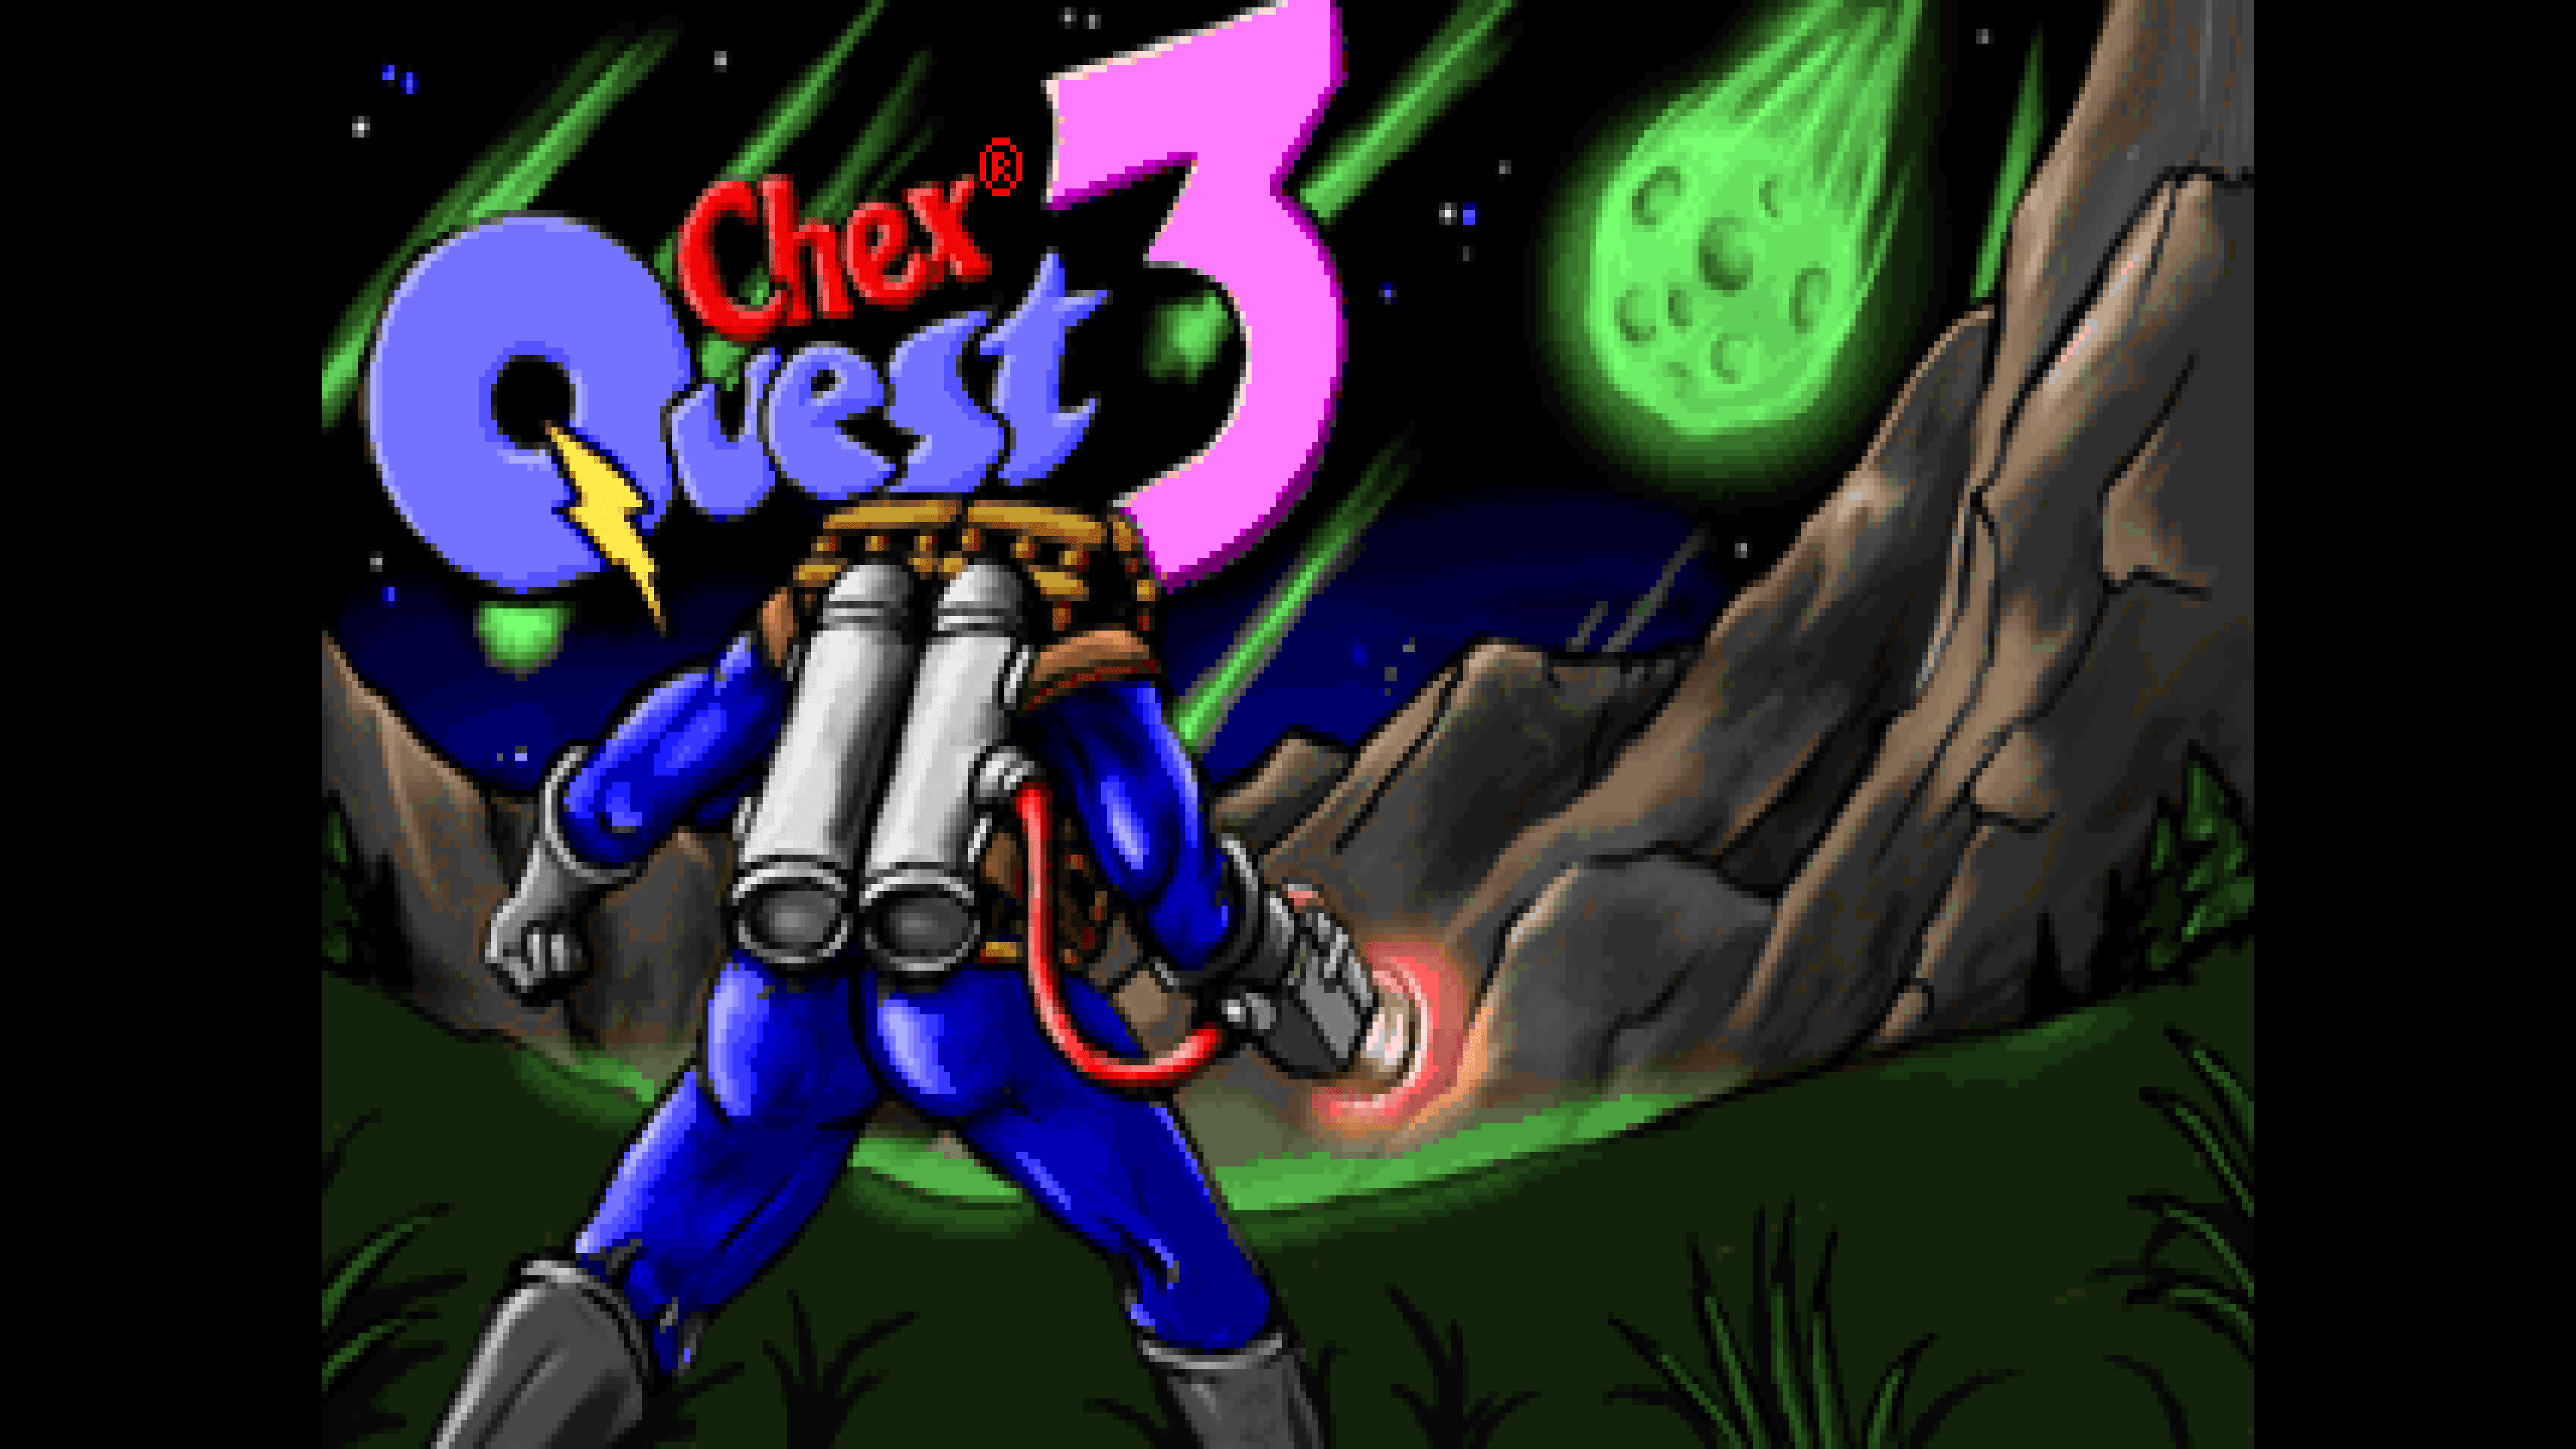 Quest 3 games. Chex Quest 1. Chex Quest 3. Chex Quest 2. Chex Quest 1996.